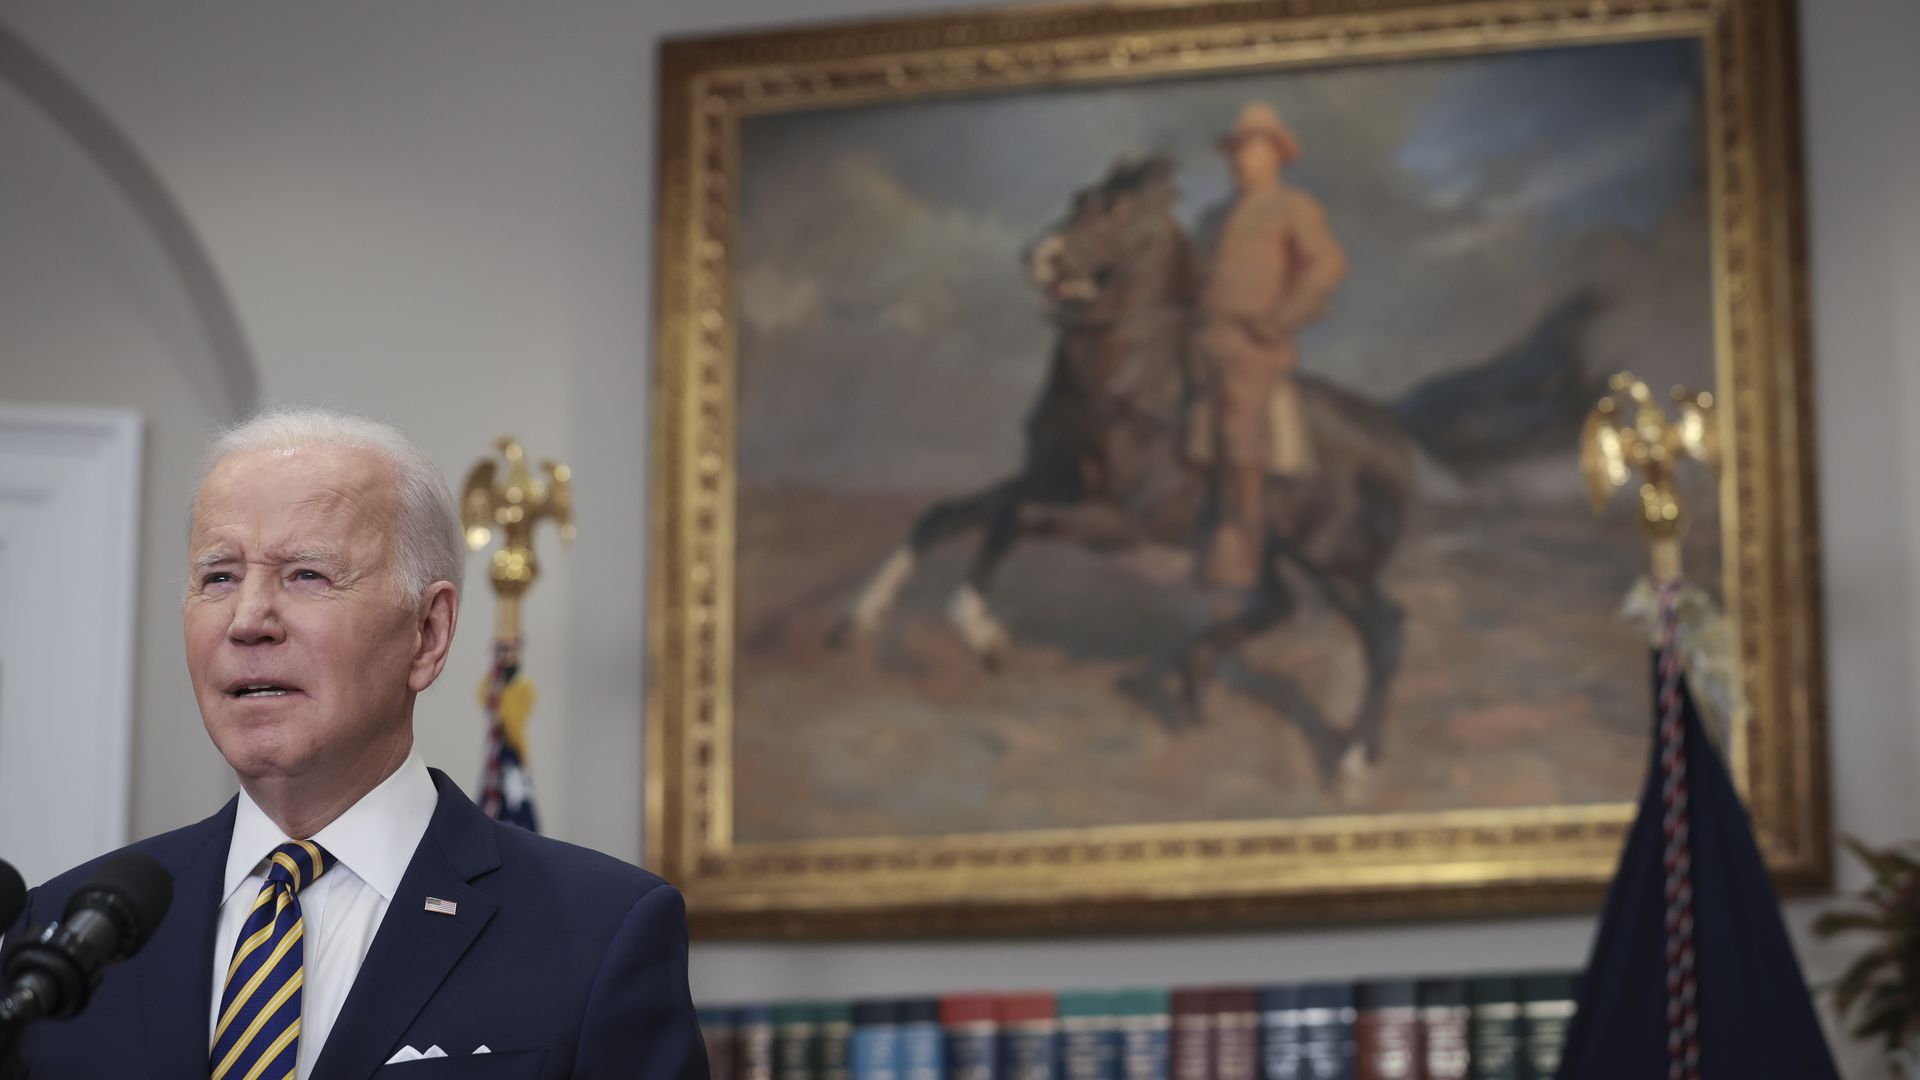 President Biden is seen speaking in front of a portrait of Teddy Roosevelt.